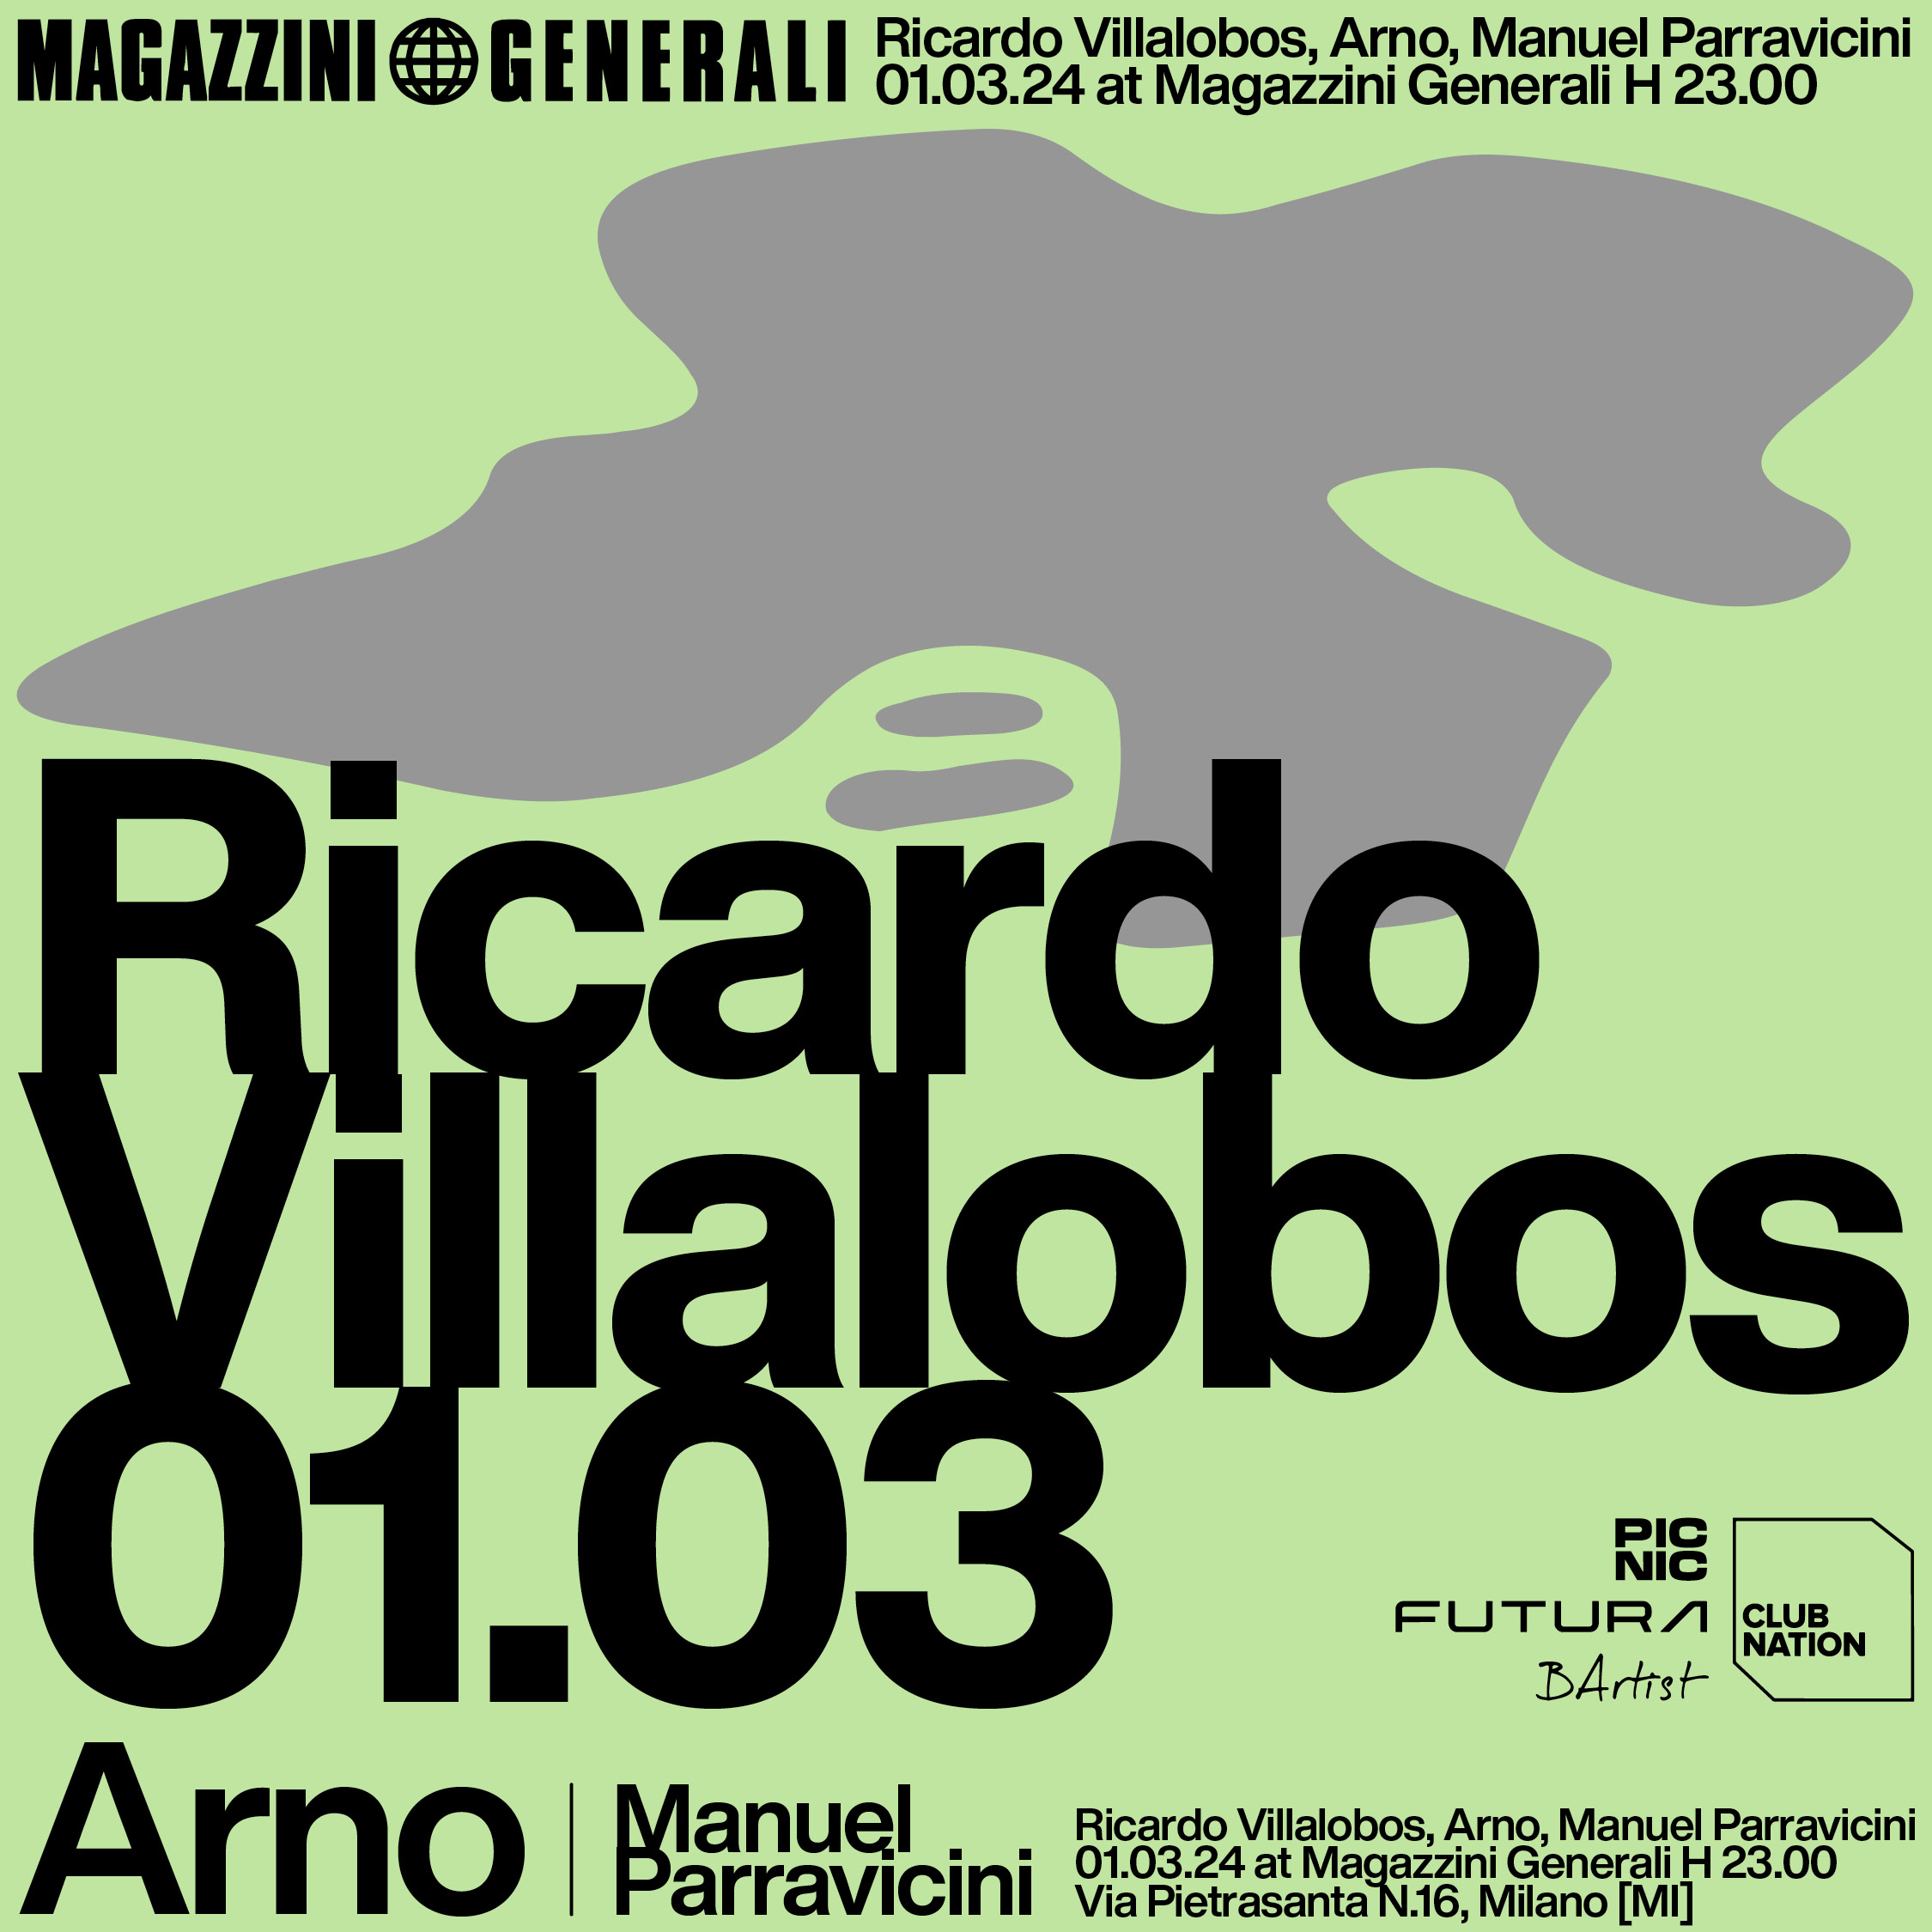 RICARDO VILLALOBOS - MAGAZZINI GENERALI - MILANO - 01.03.24